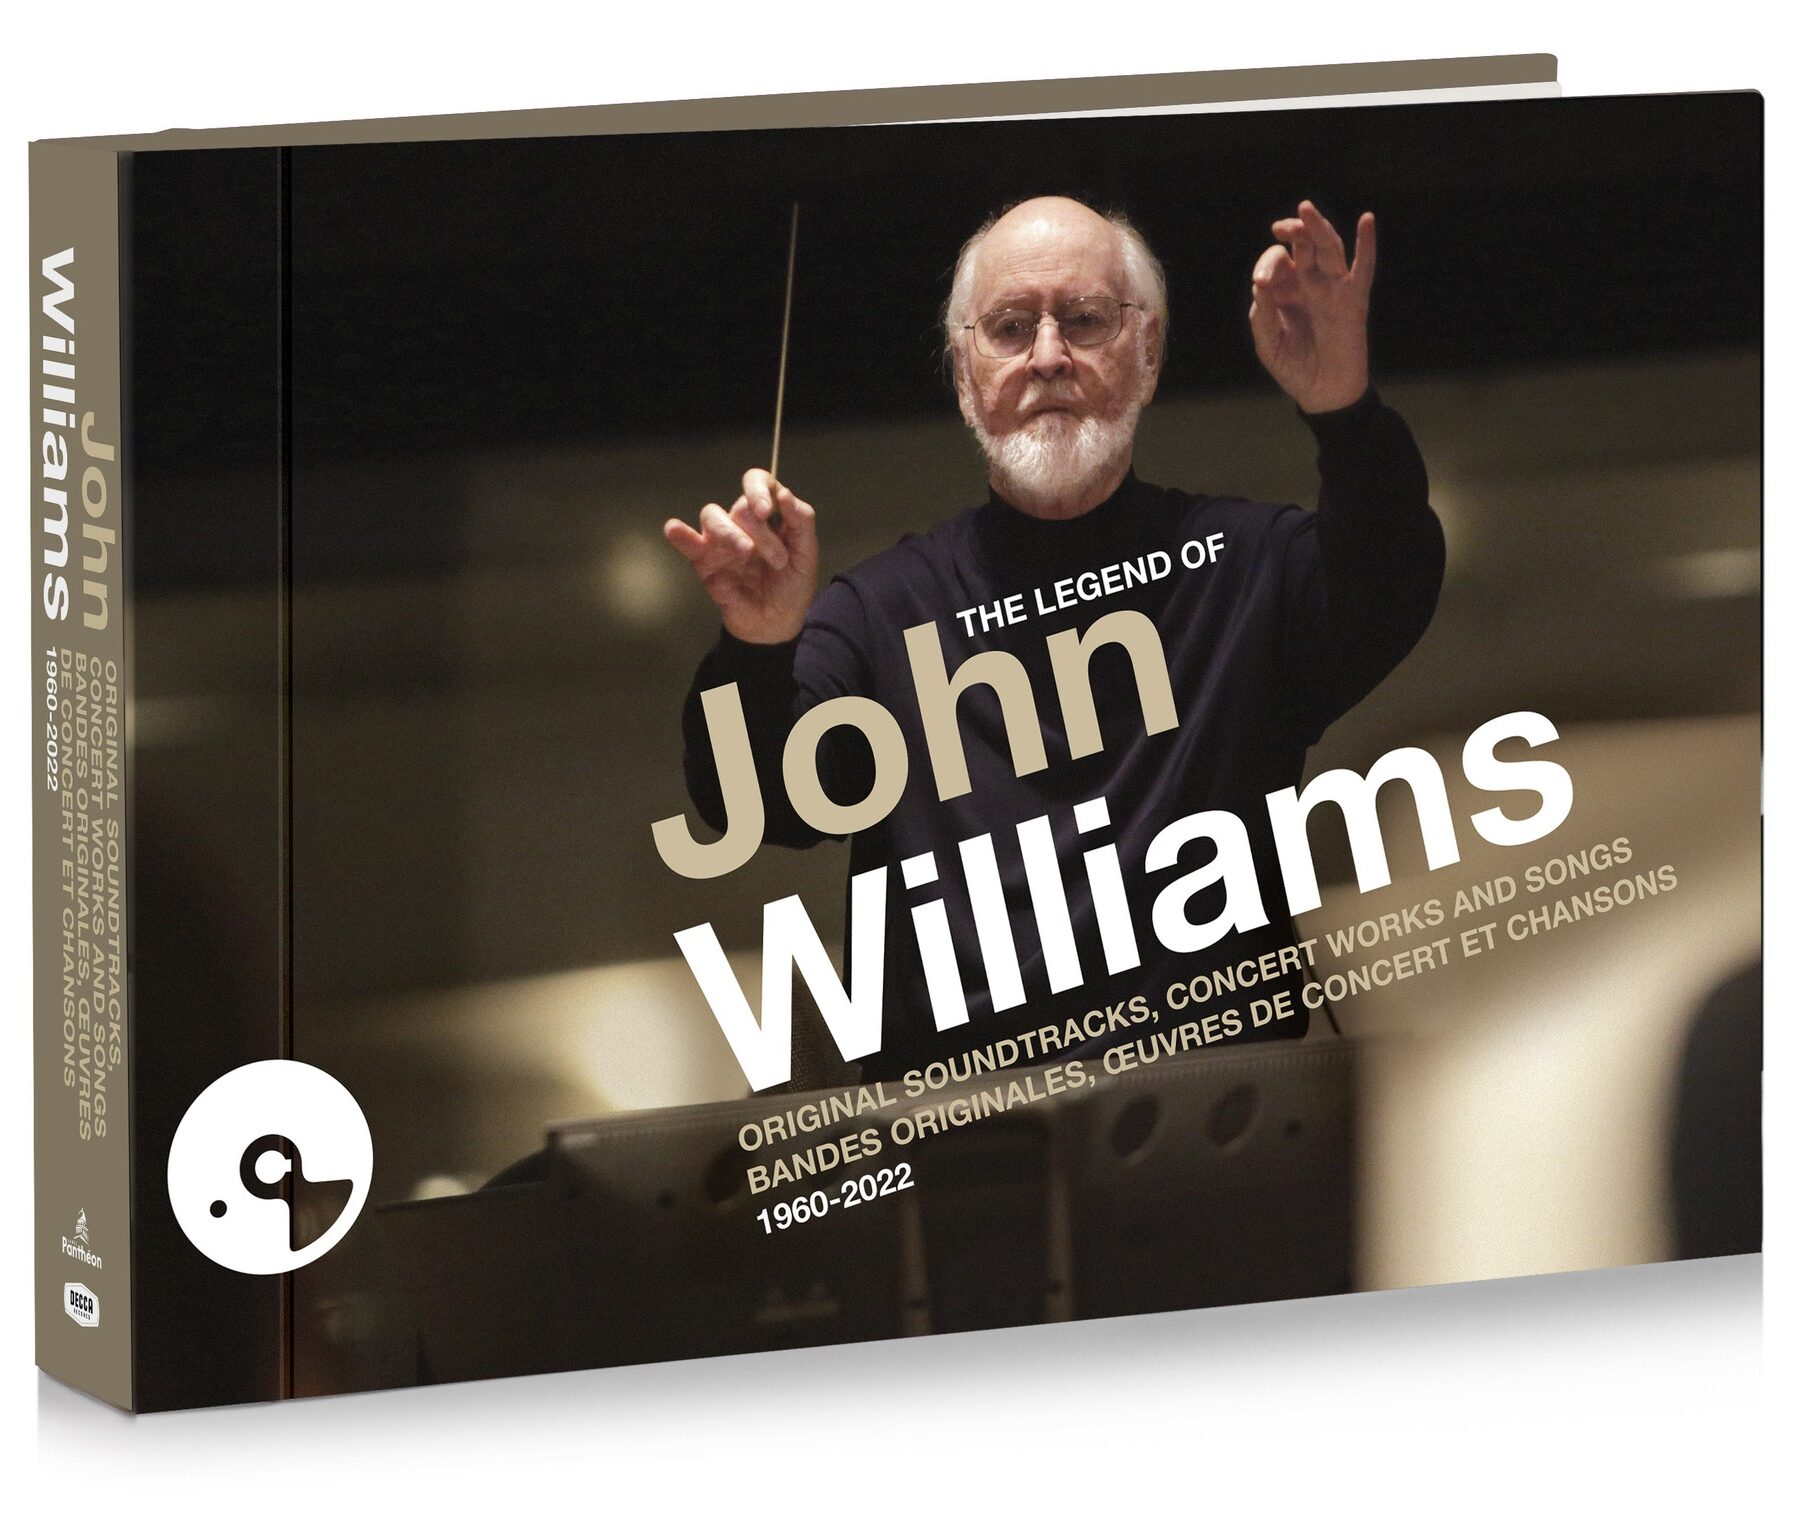 The Legend of John Williams' 20-CD Box Set – Original Soundtracks